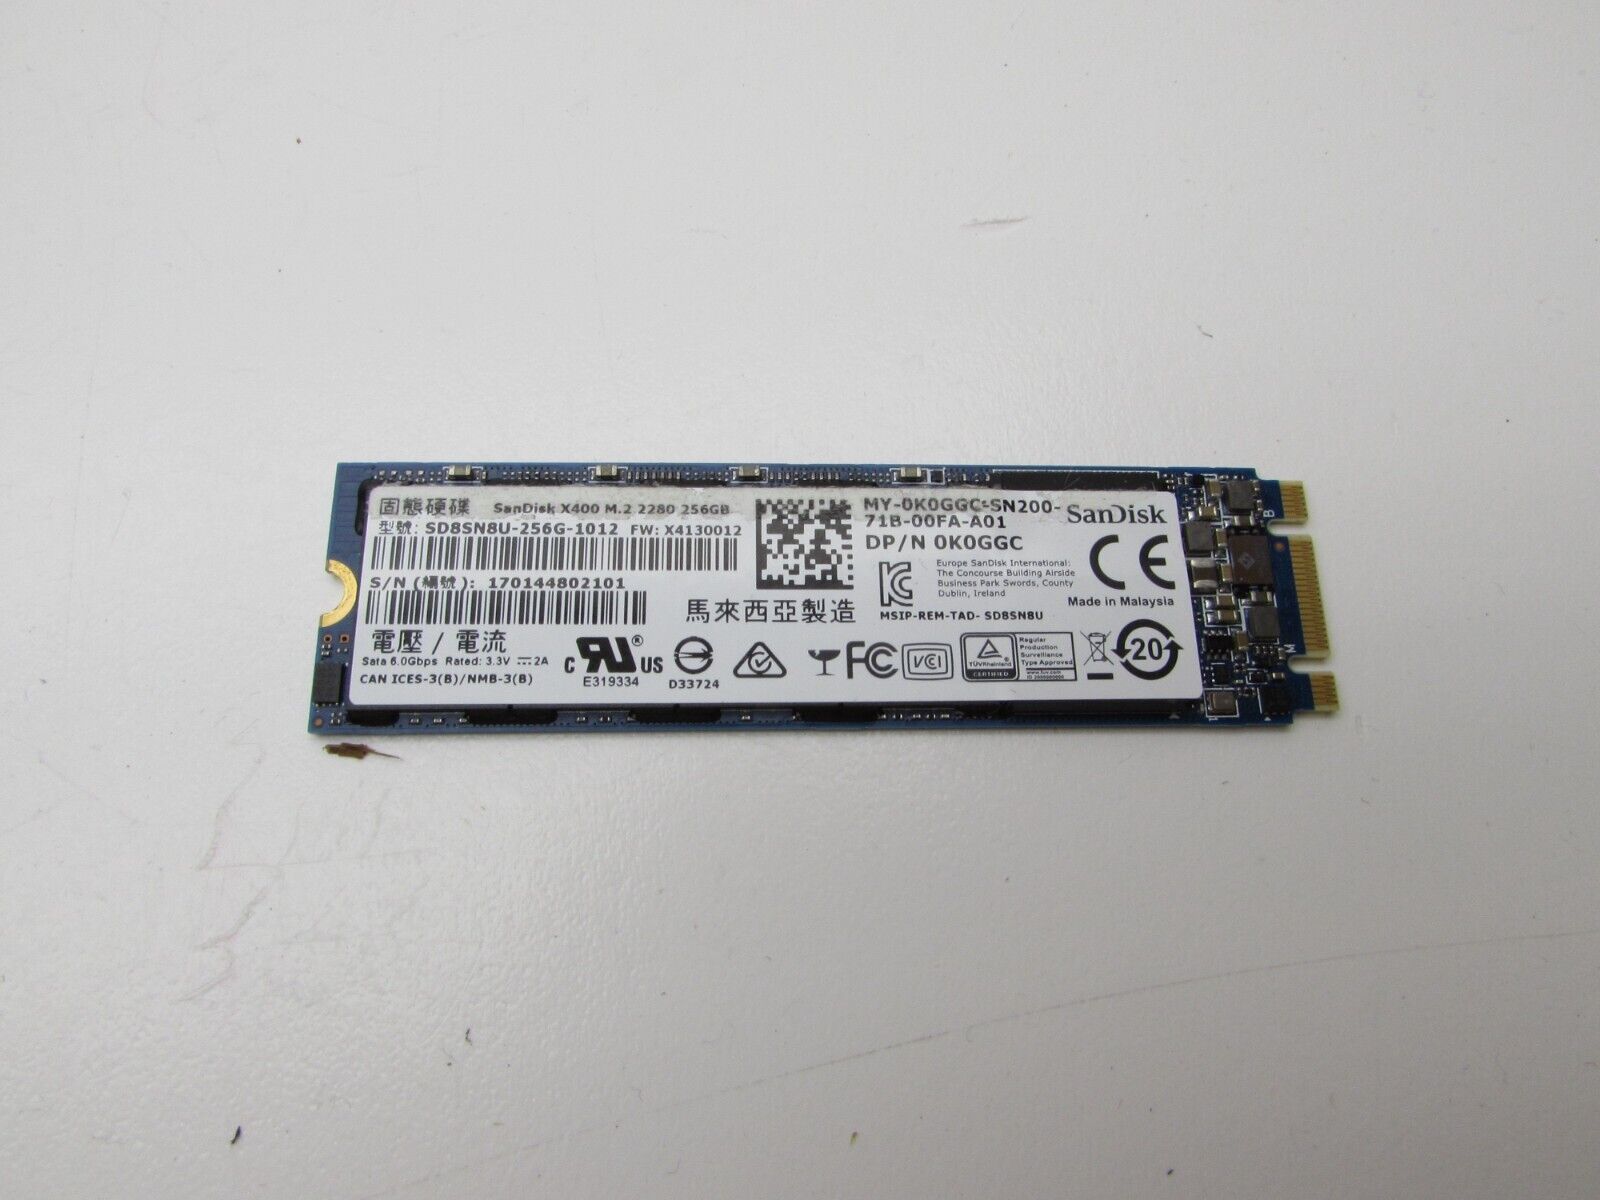 SanDisk X400 256GB SATA M.2 2280 SSD Solid State Drive SD8SN8U-256G-1012